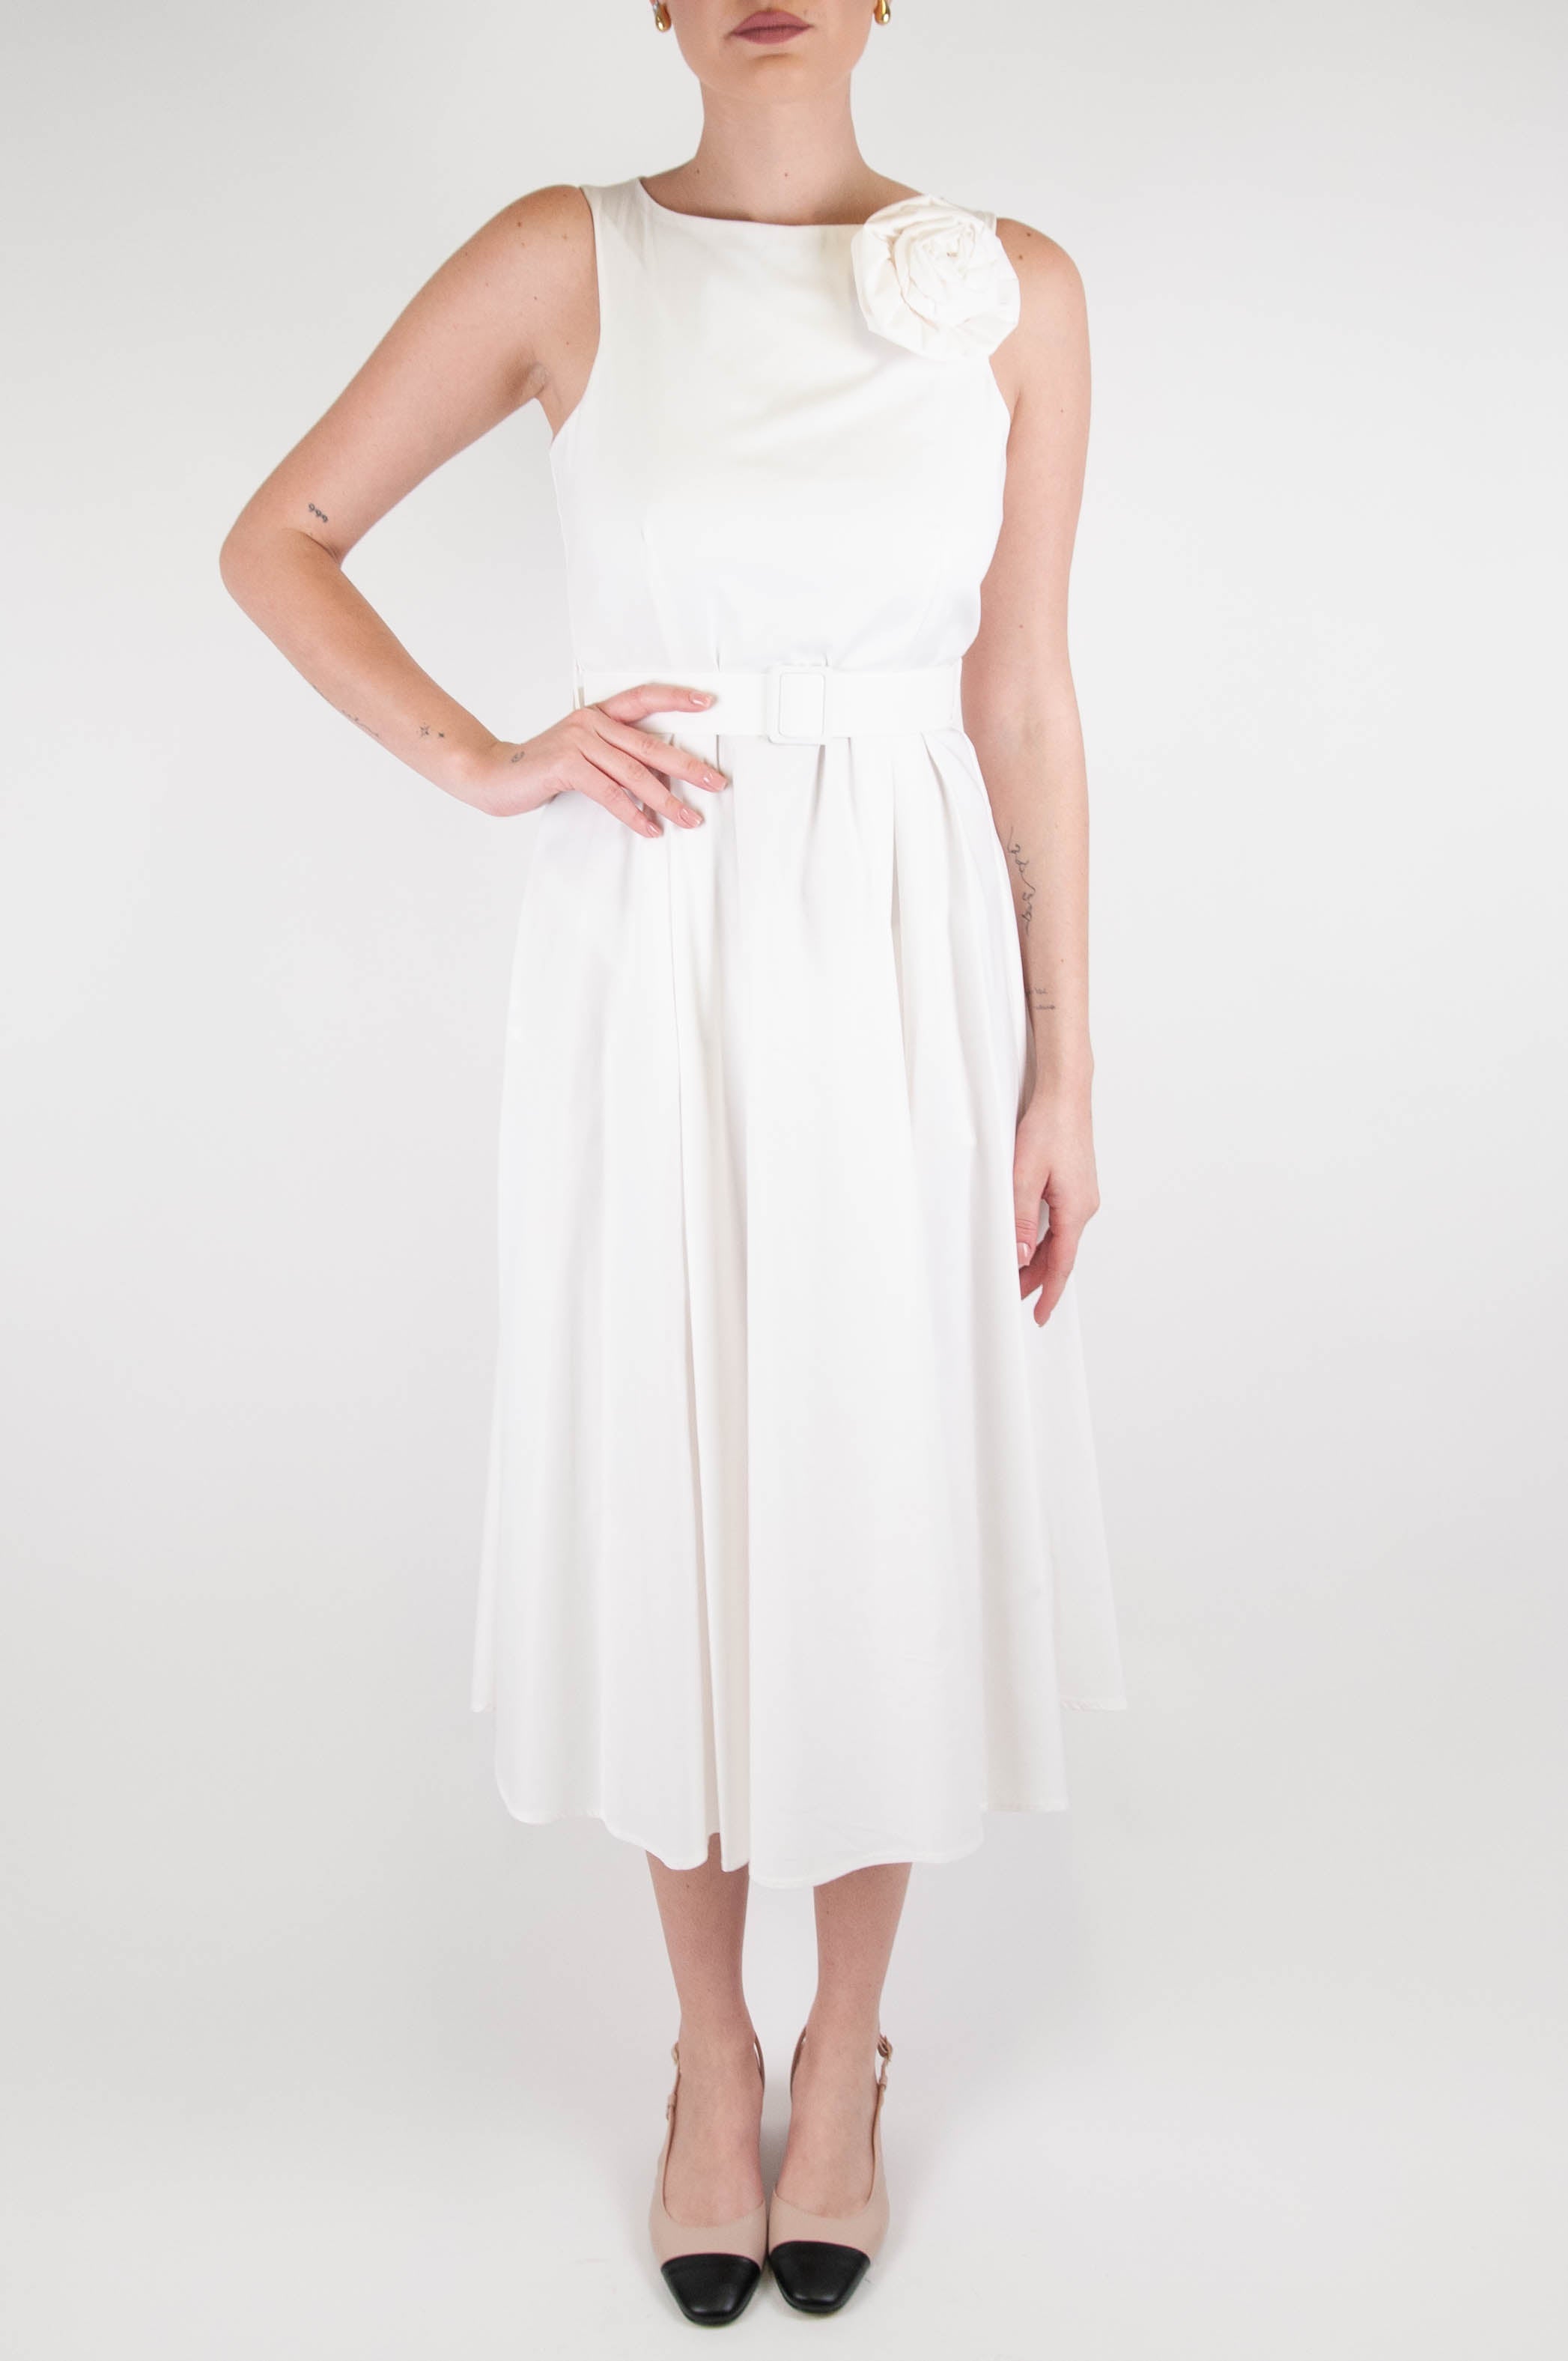 Maryley - Long sleeveless dress with flower brooch